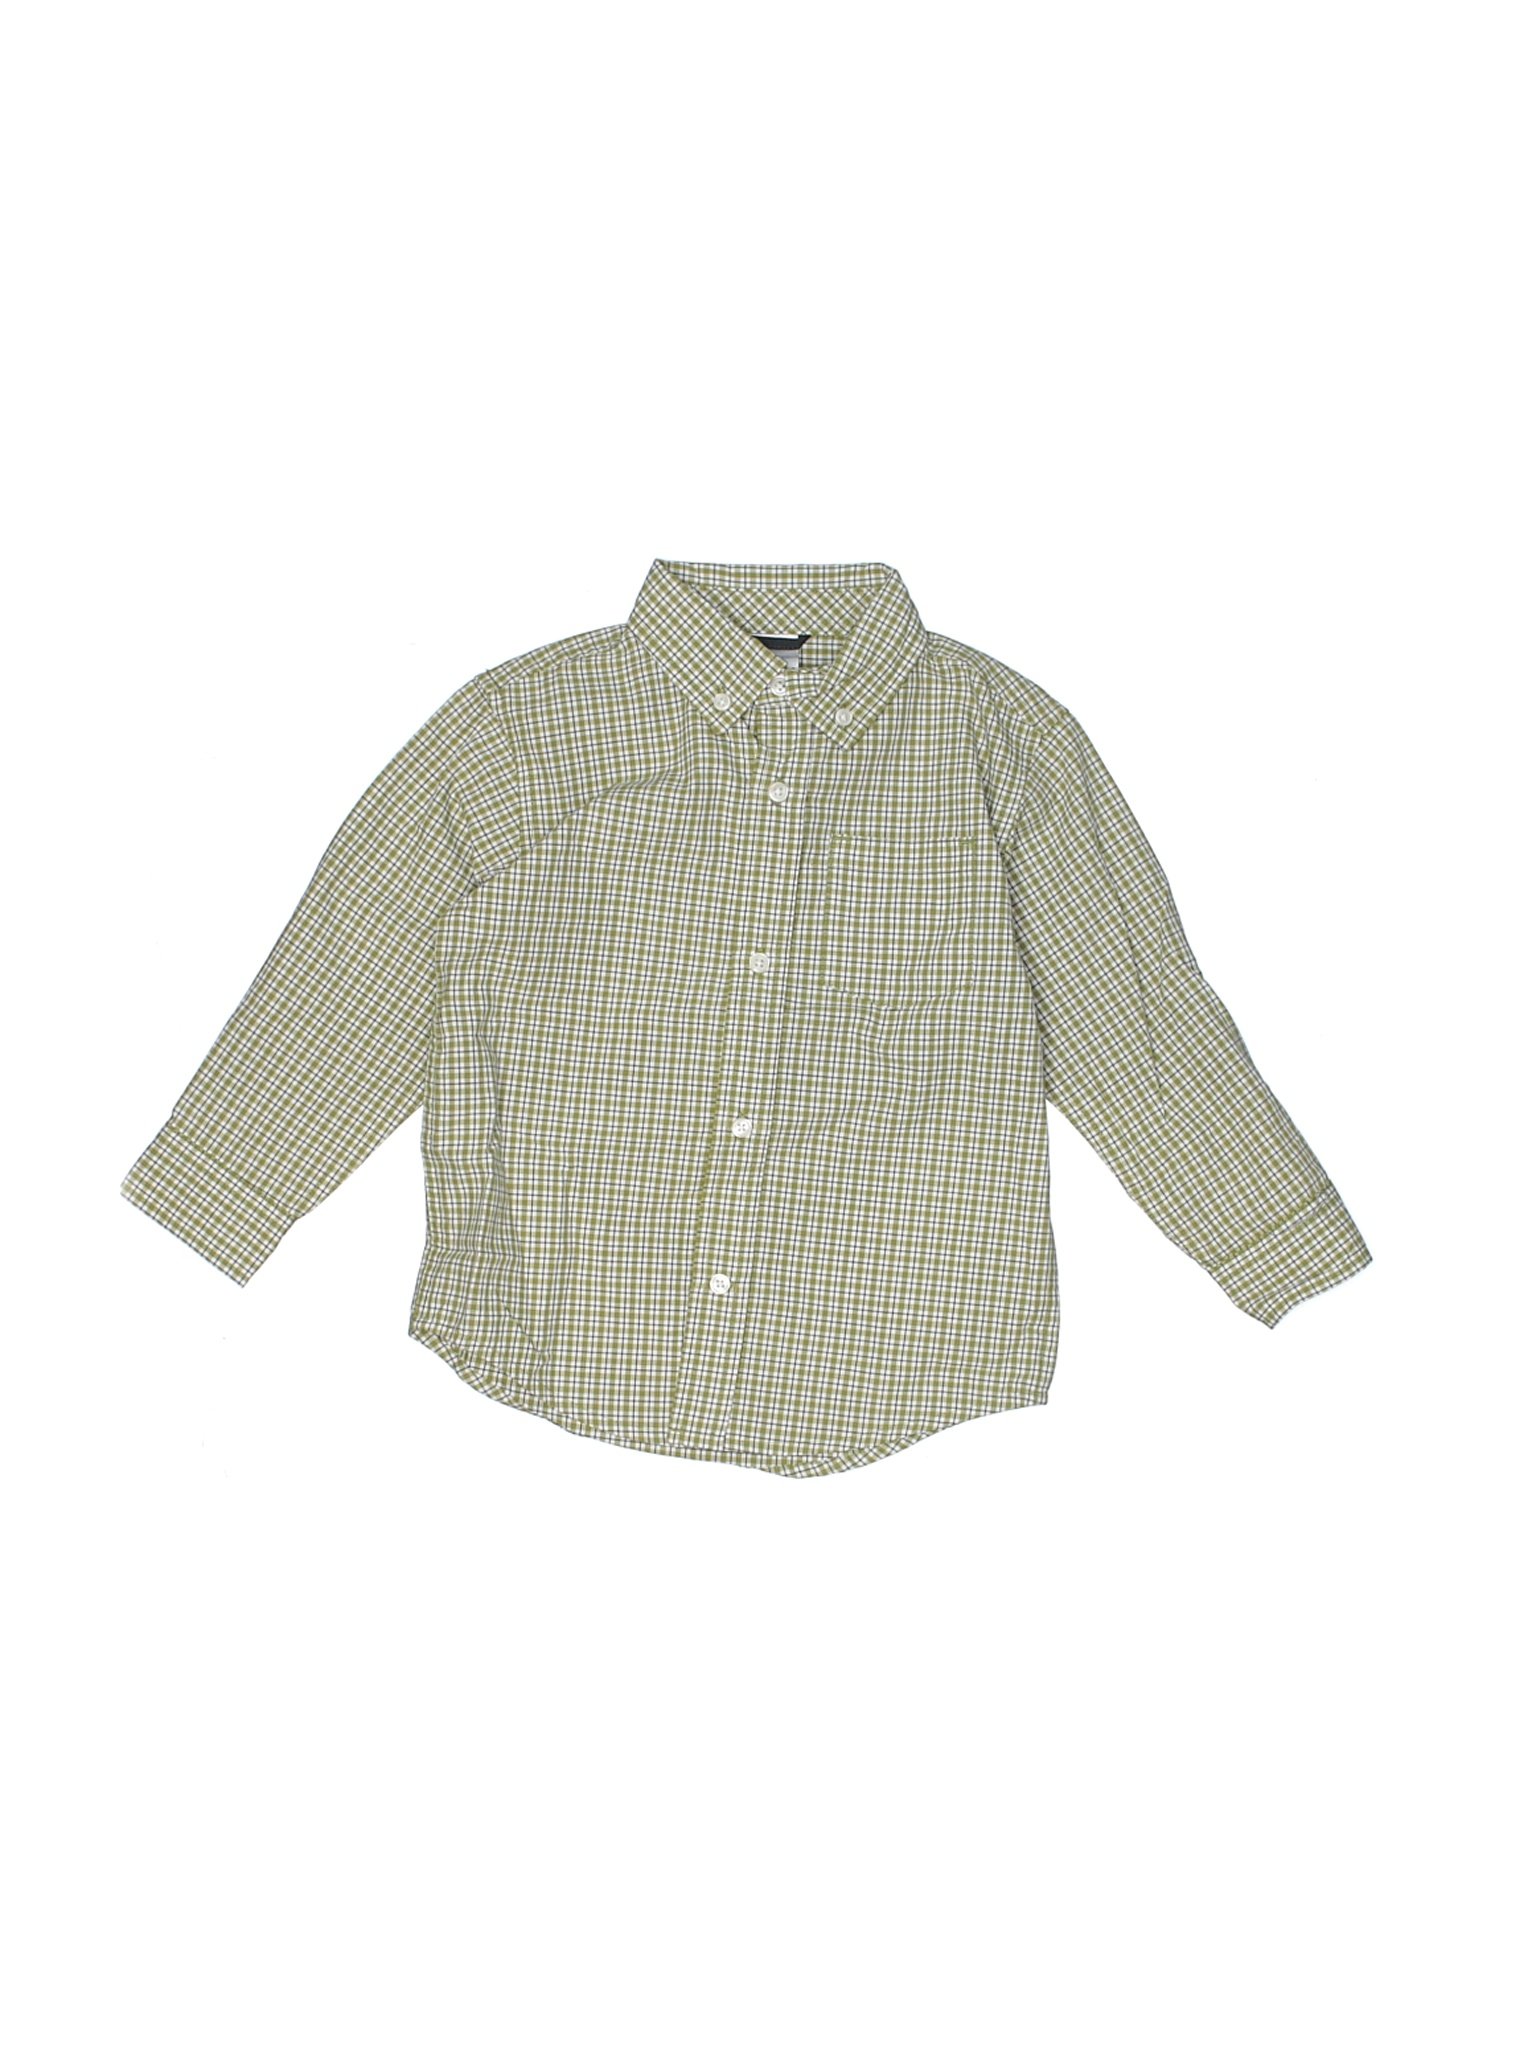 Gymboree Boys Green Long Sleeve Button-Down Shirt 2T | eBay